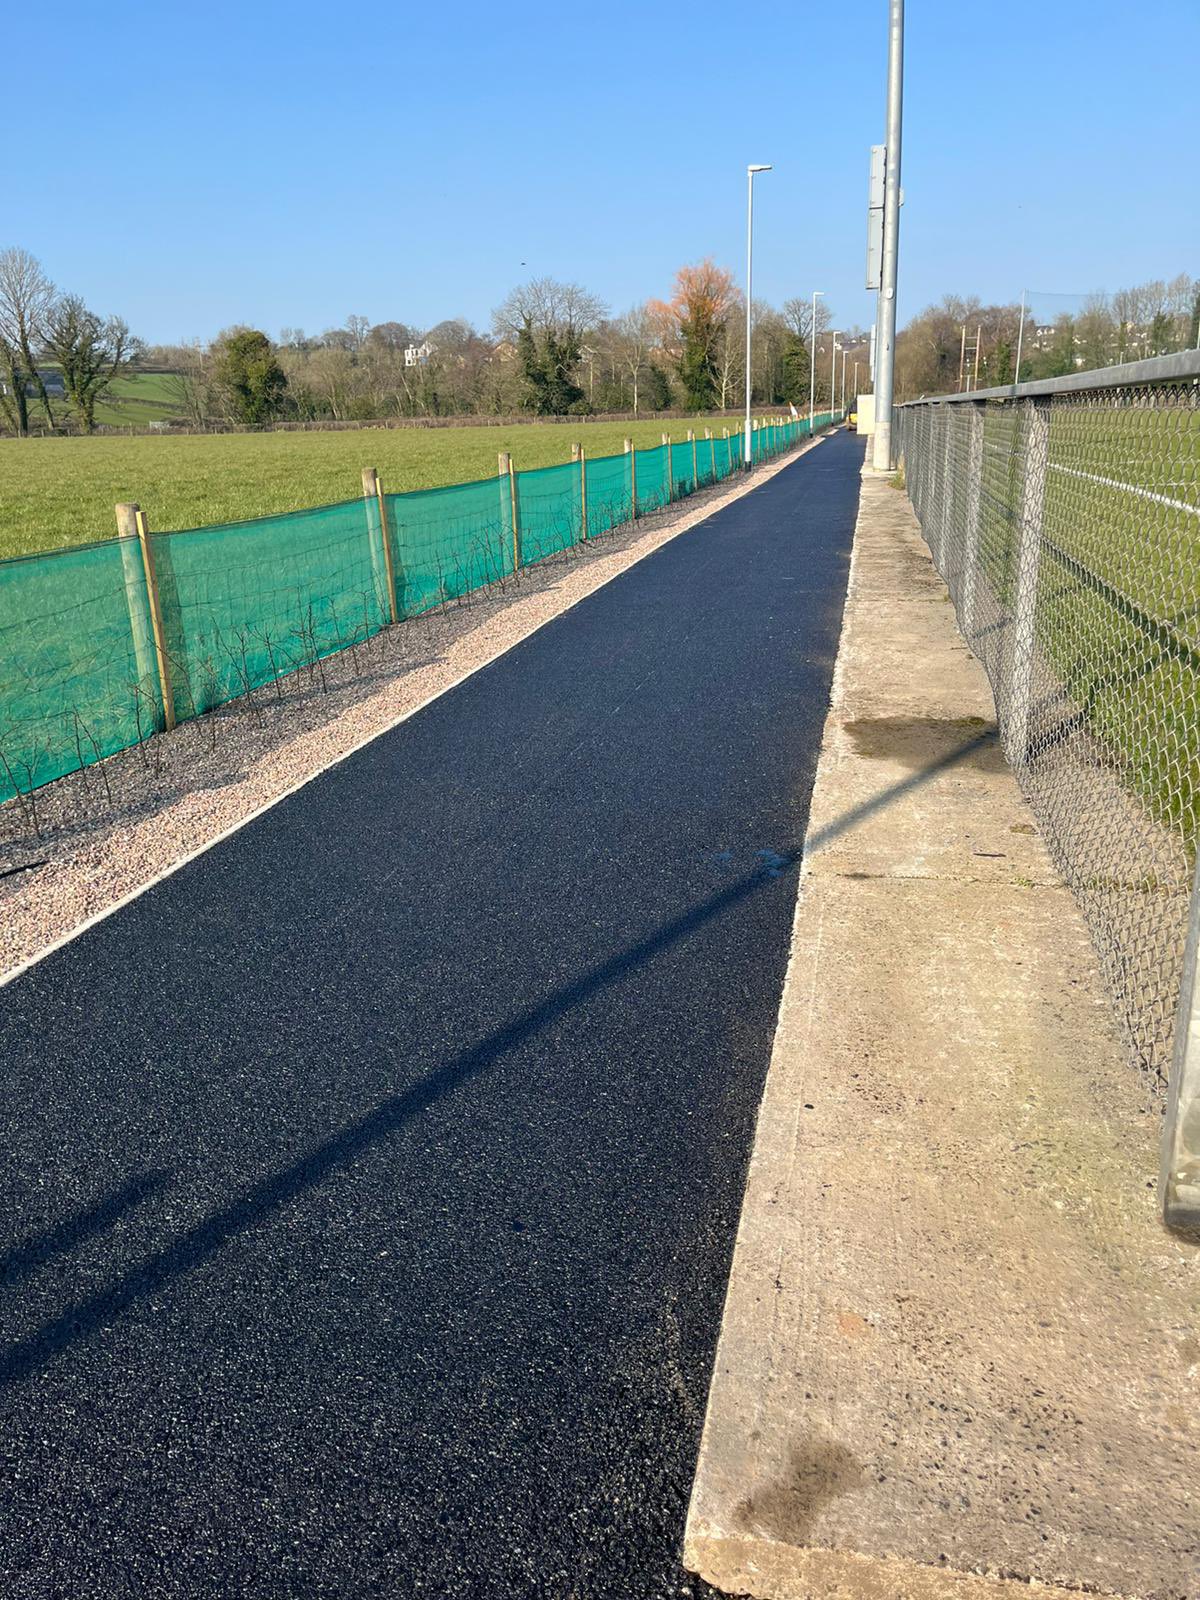 Tarmac pathway alongside football pitch